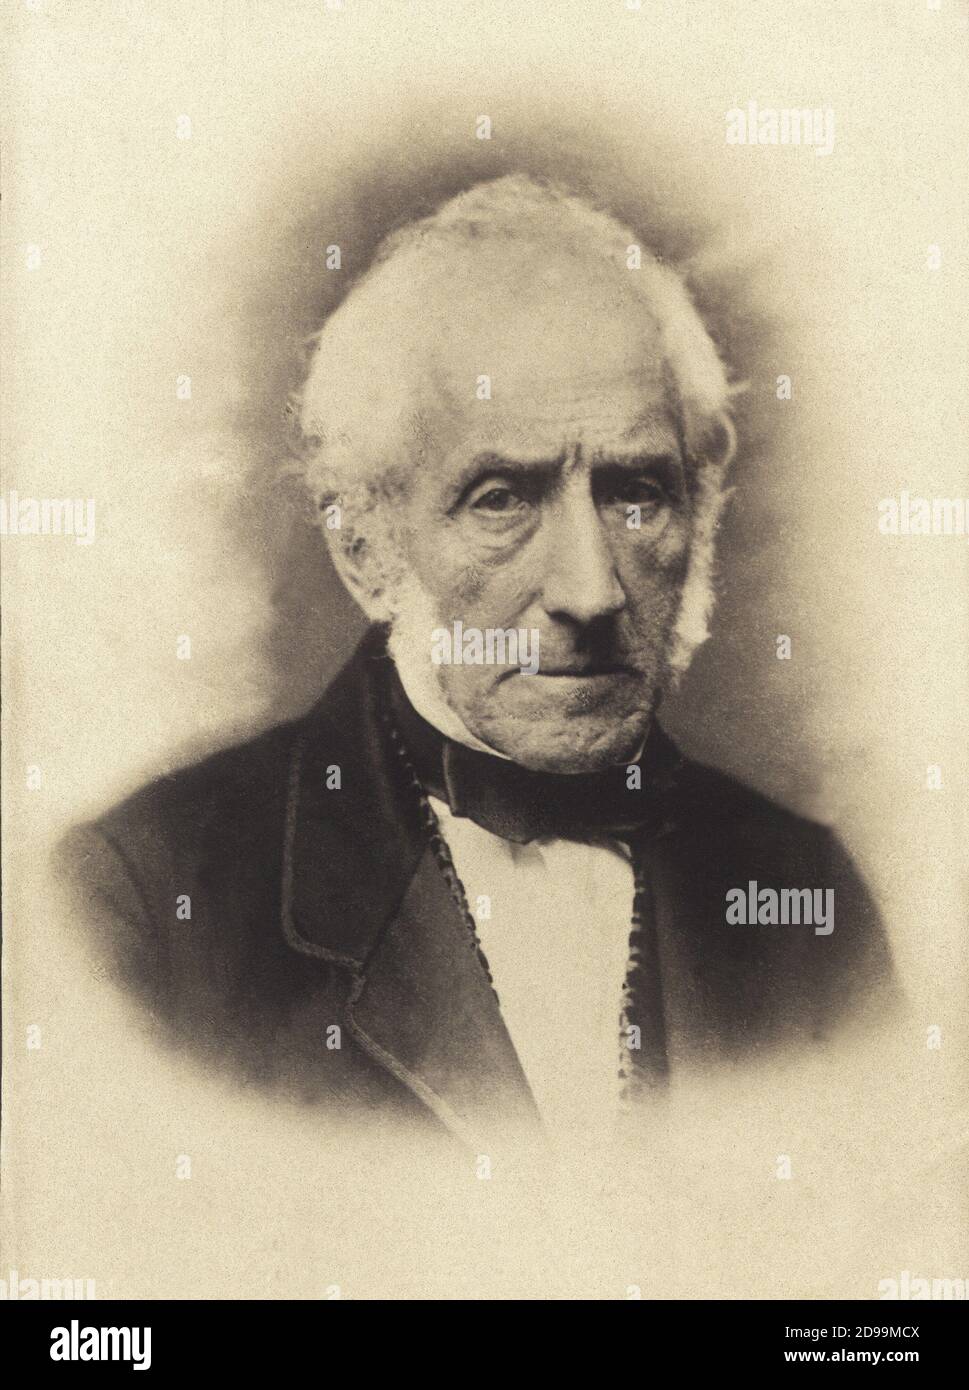 Der berühmteste italienische Schriftsteller ALESSANDRO MANZONI ( Milano 1785 - 1873 ) - Portrait - ritratto - scrittore - poeta - Poet - tie - papillon - cravatta - letteratura italiana ---- Archivio GBB Stockfoto